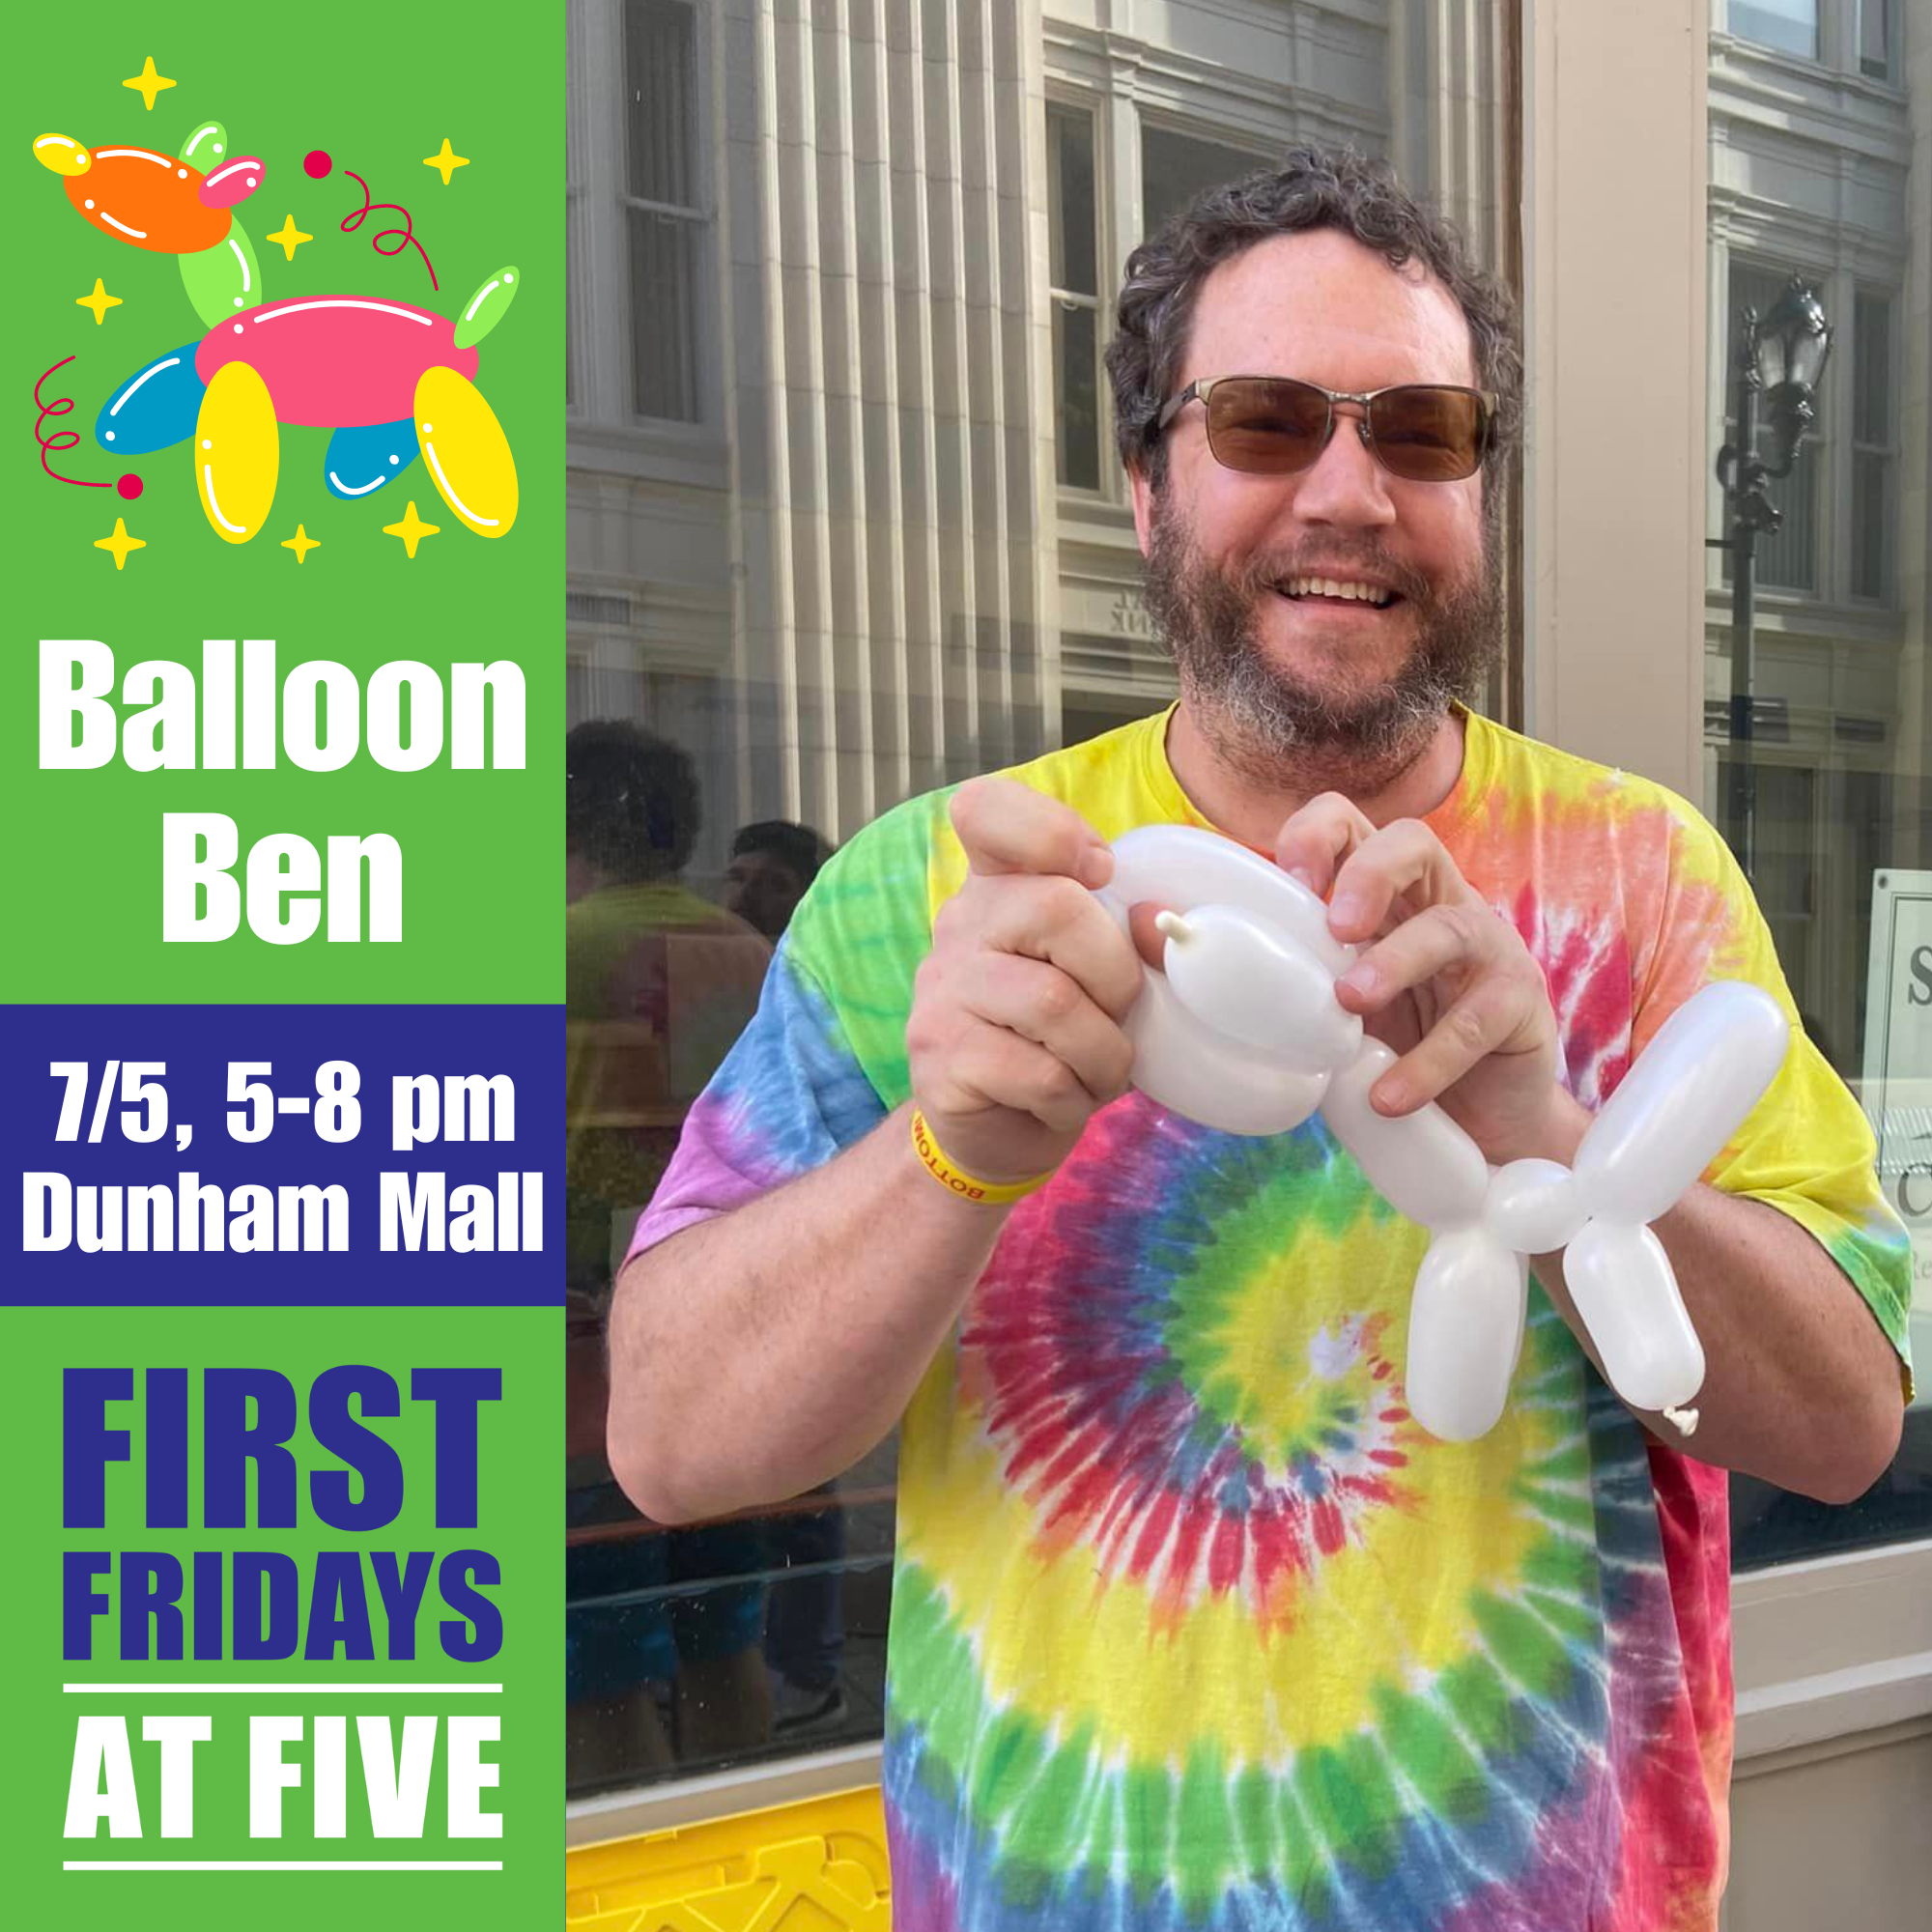 Balloon Ben at First Fridays at Five!